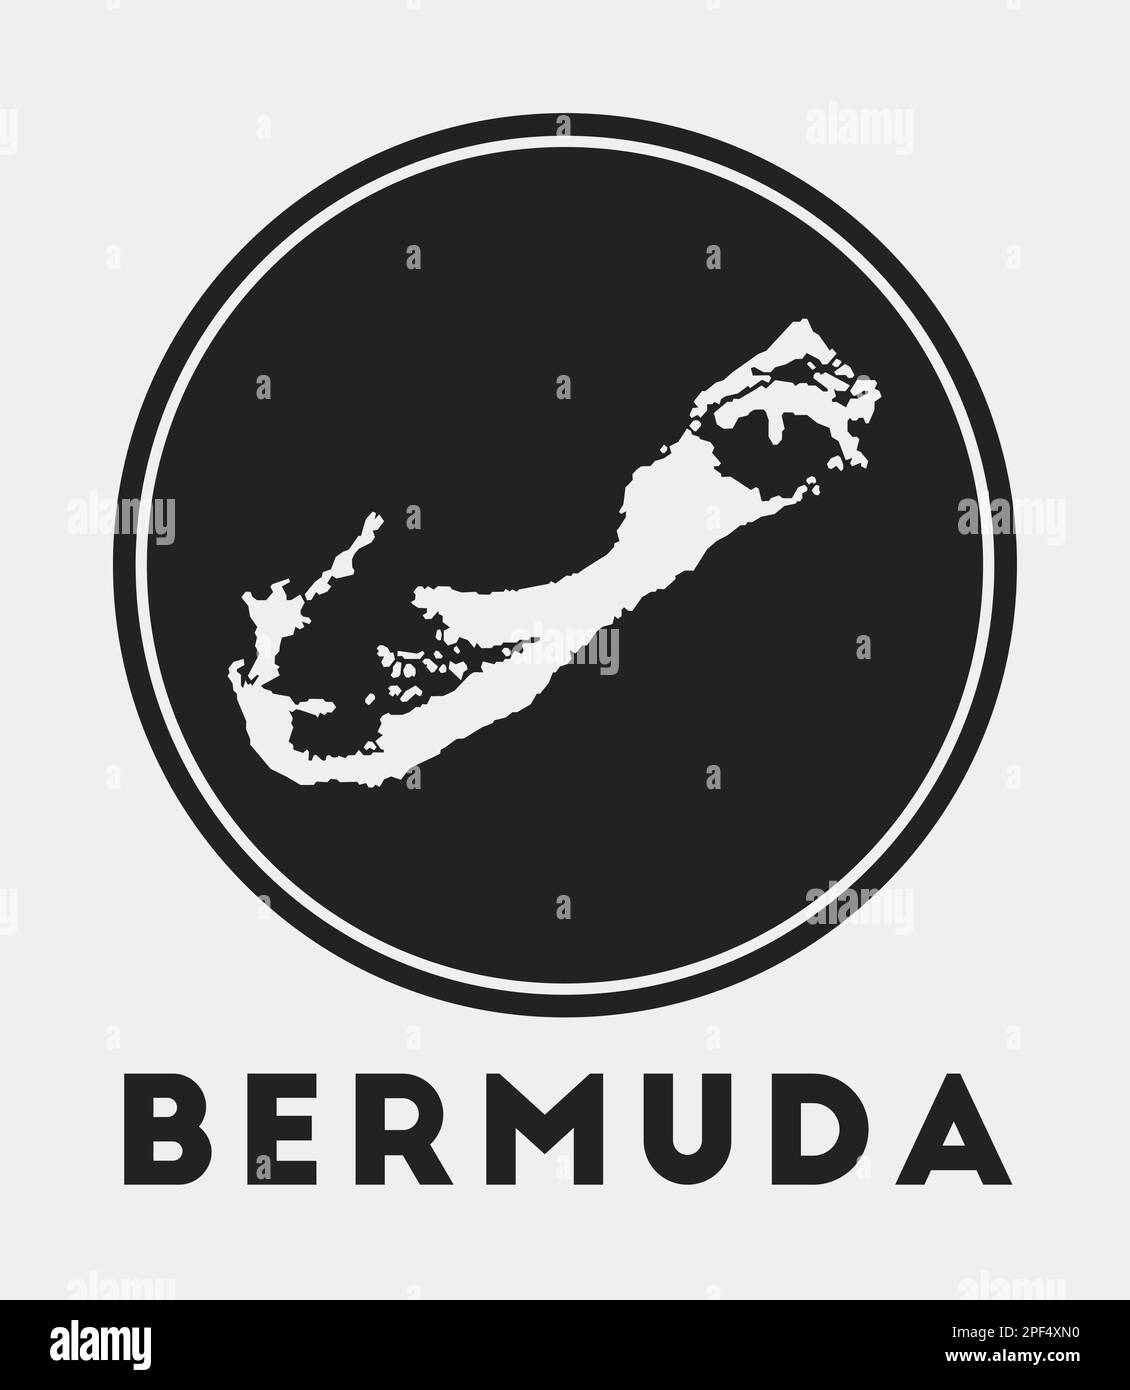 Bermuda icon. Round logo with island map and title. Stylish Bermuda ...